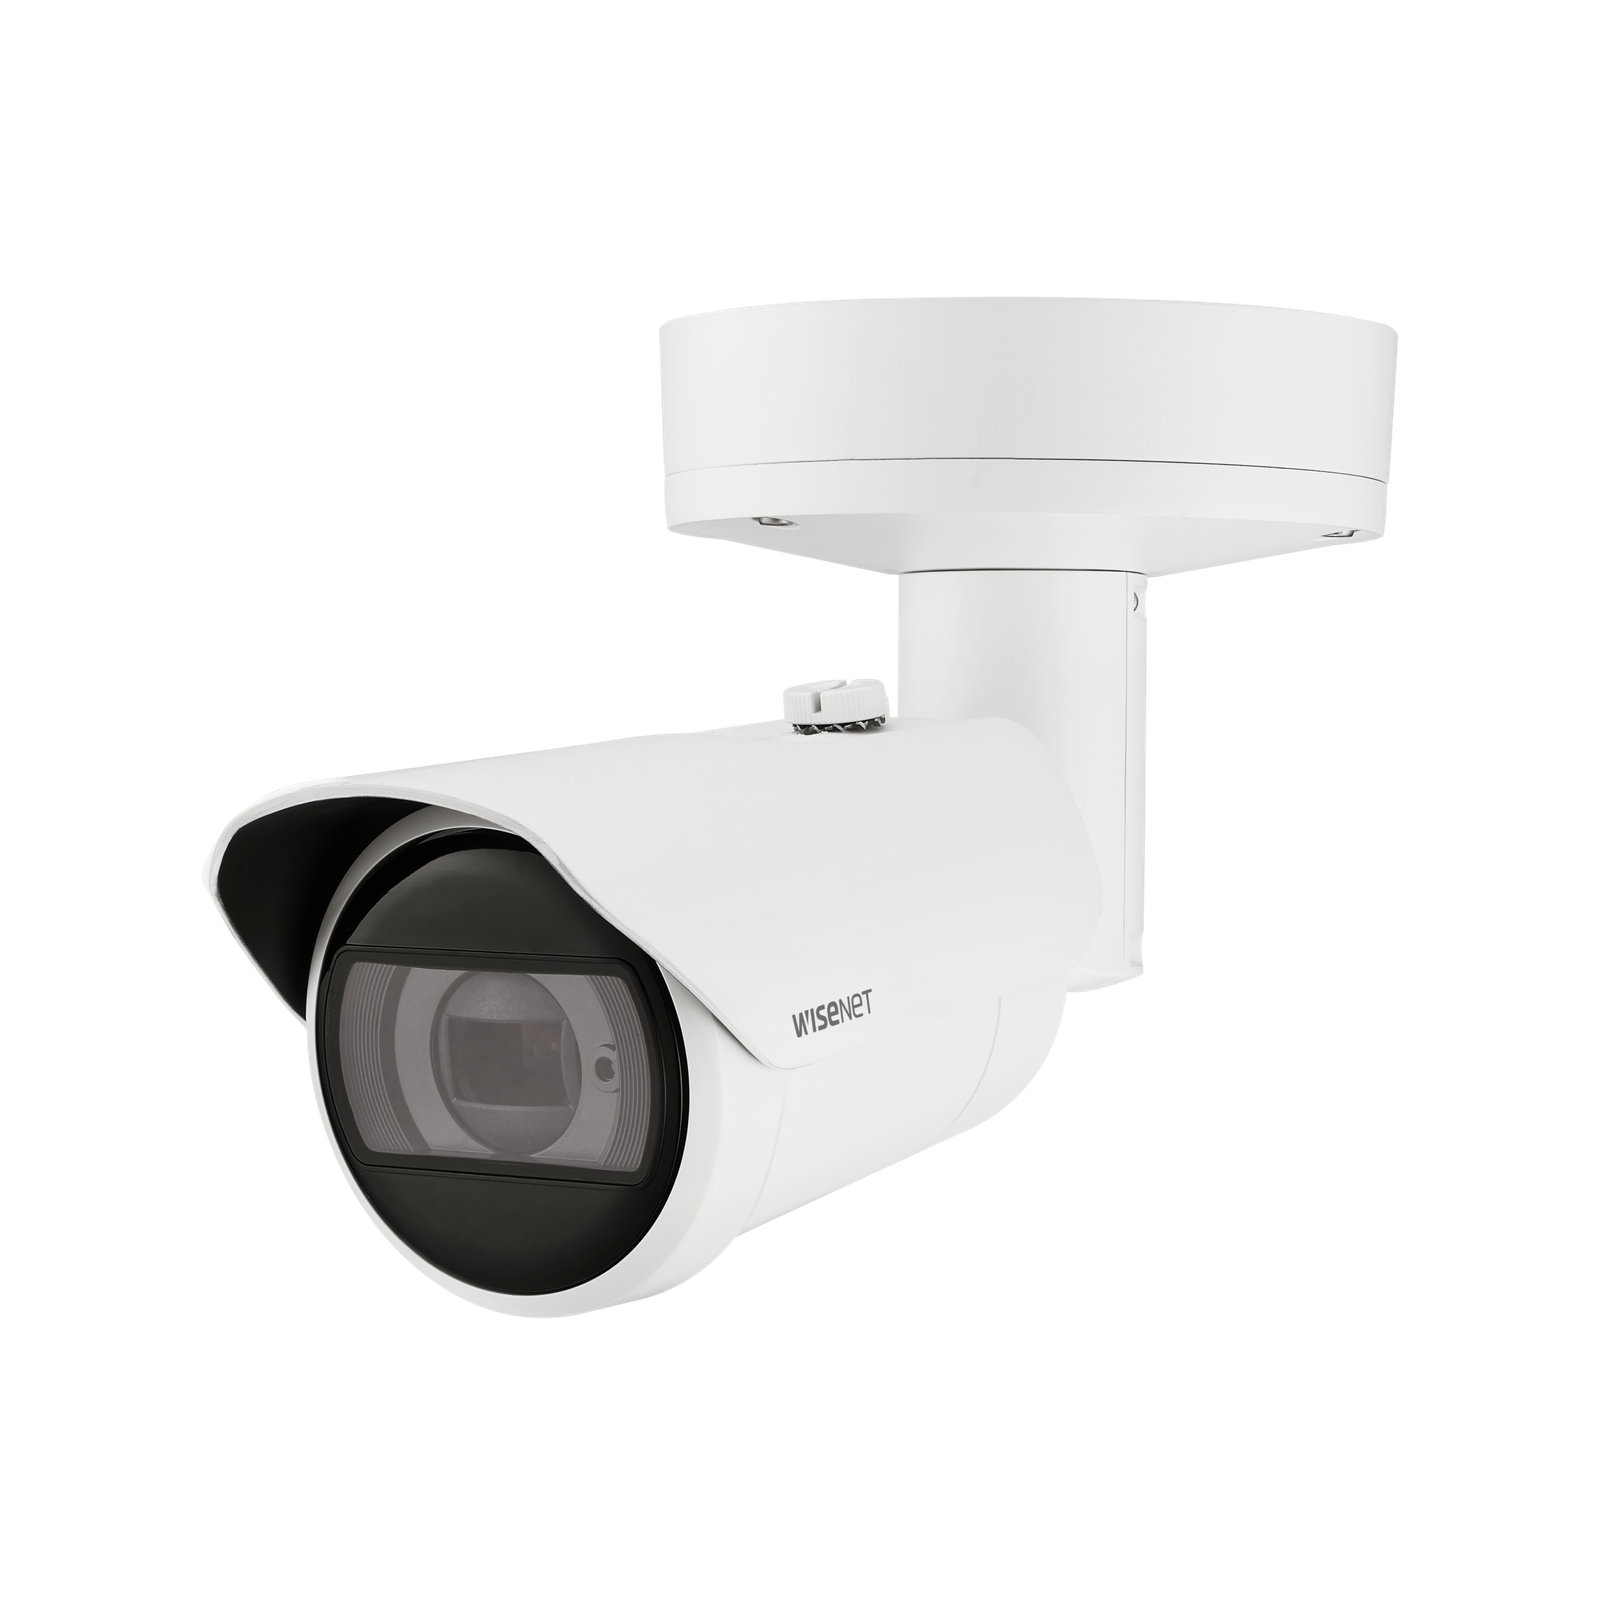 XNO-C9083R bullet Security Camera